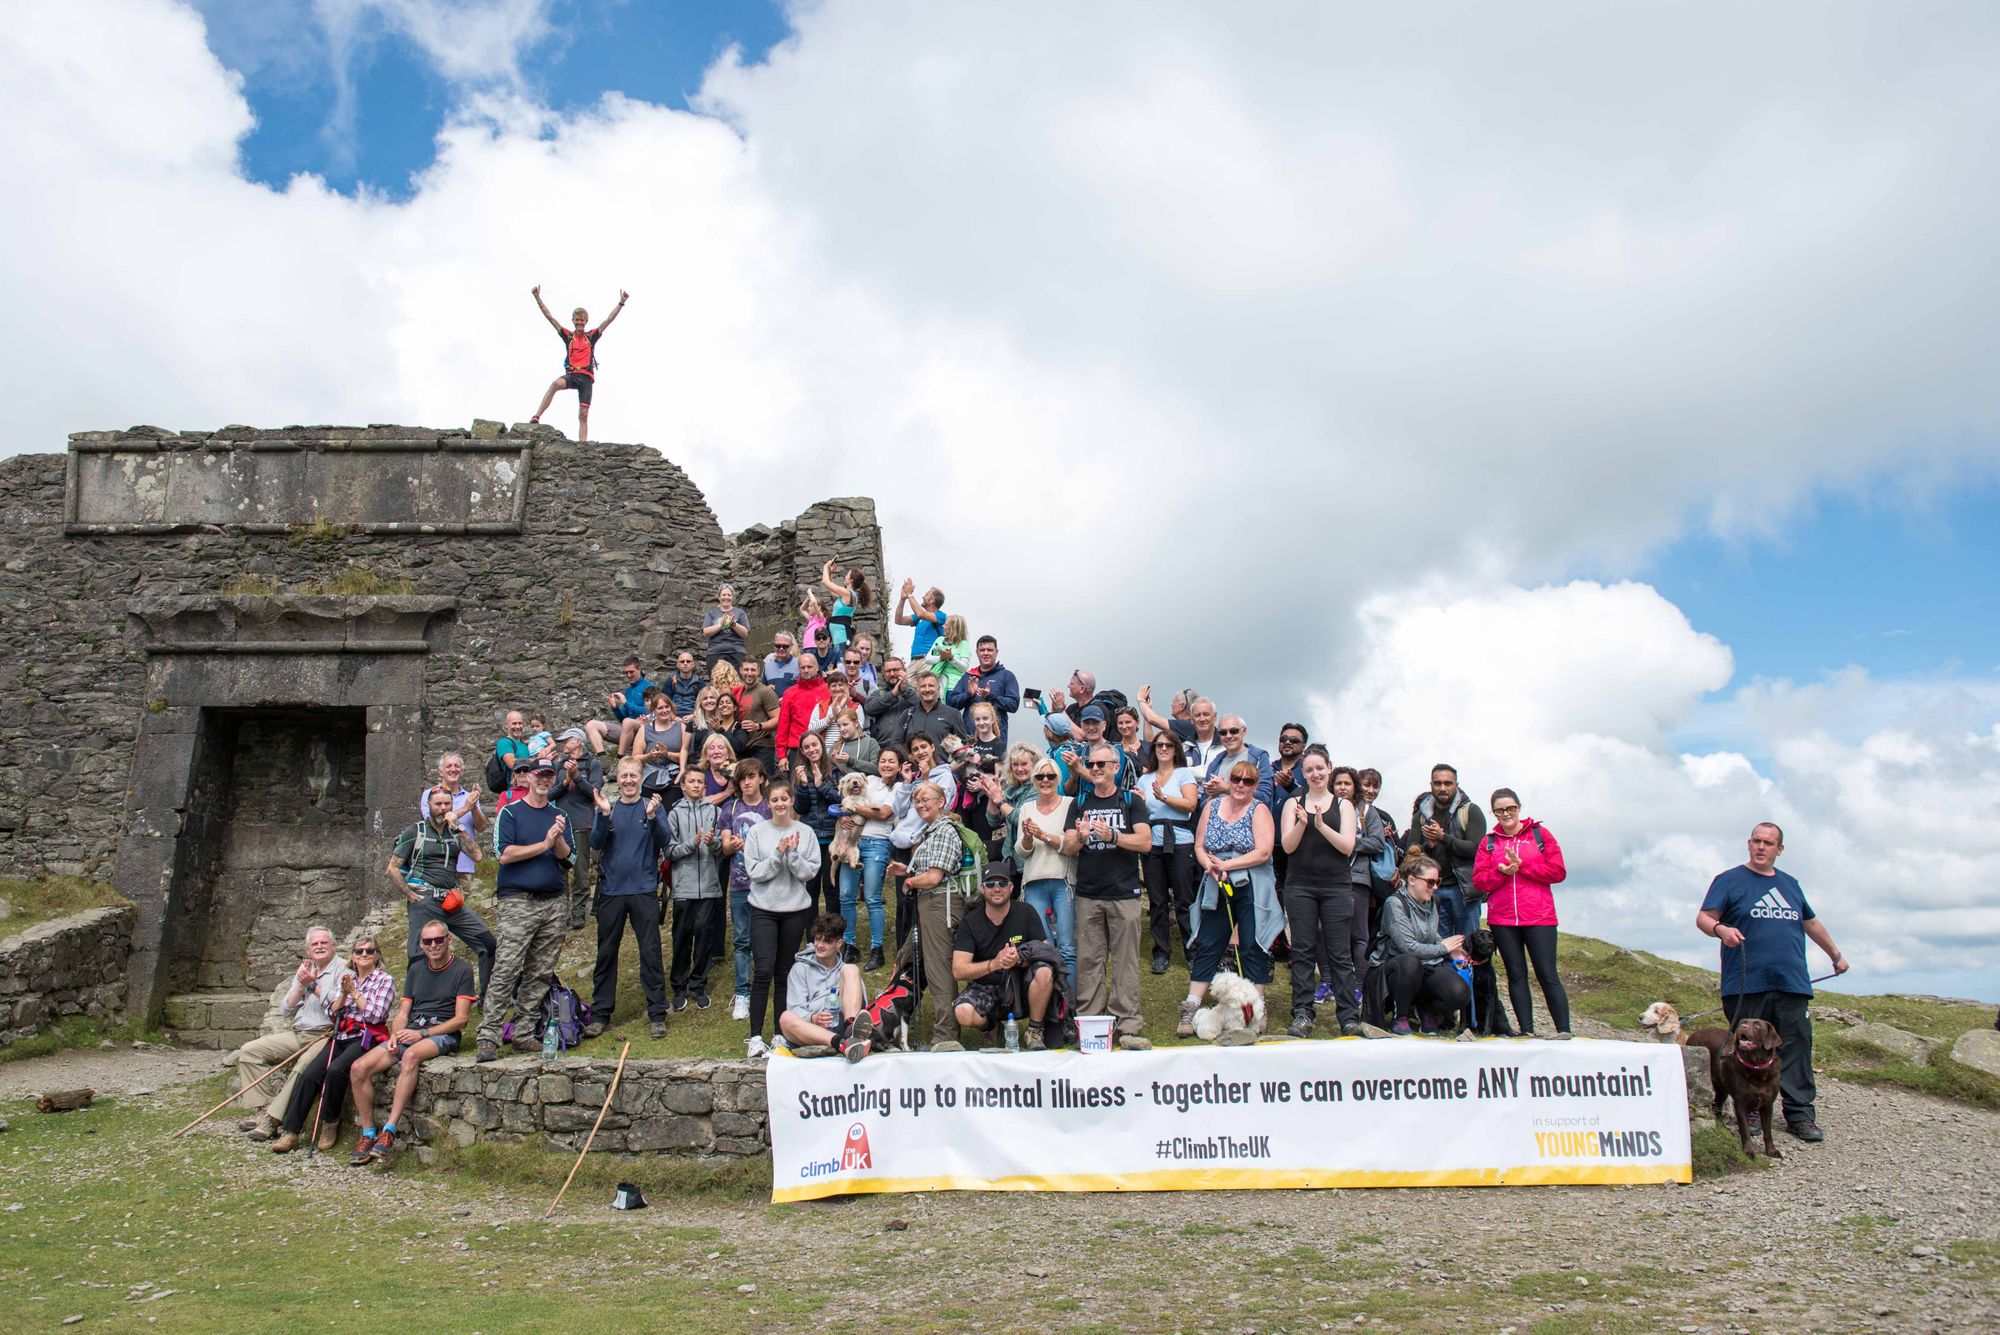 An image from Staniforth's Climb the UK challenge. Photo: Jonathan Davies